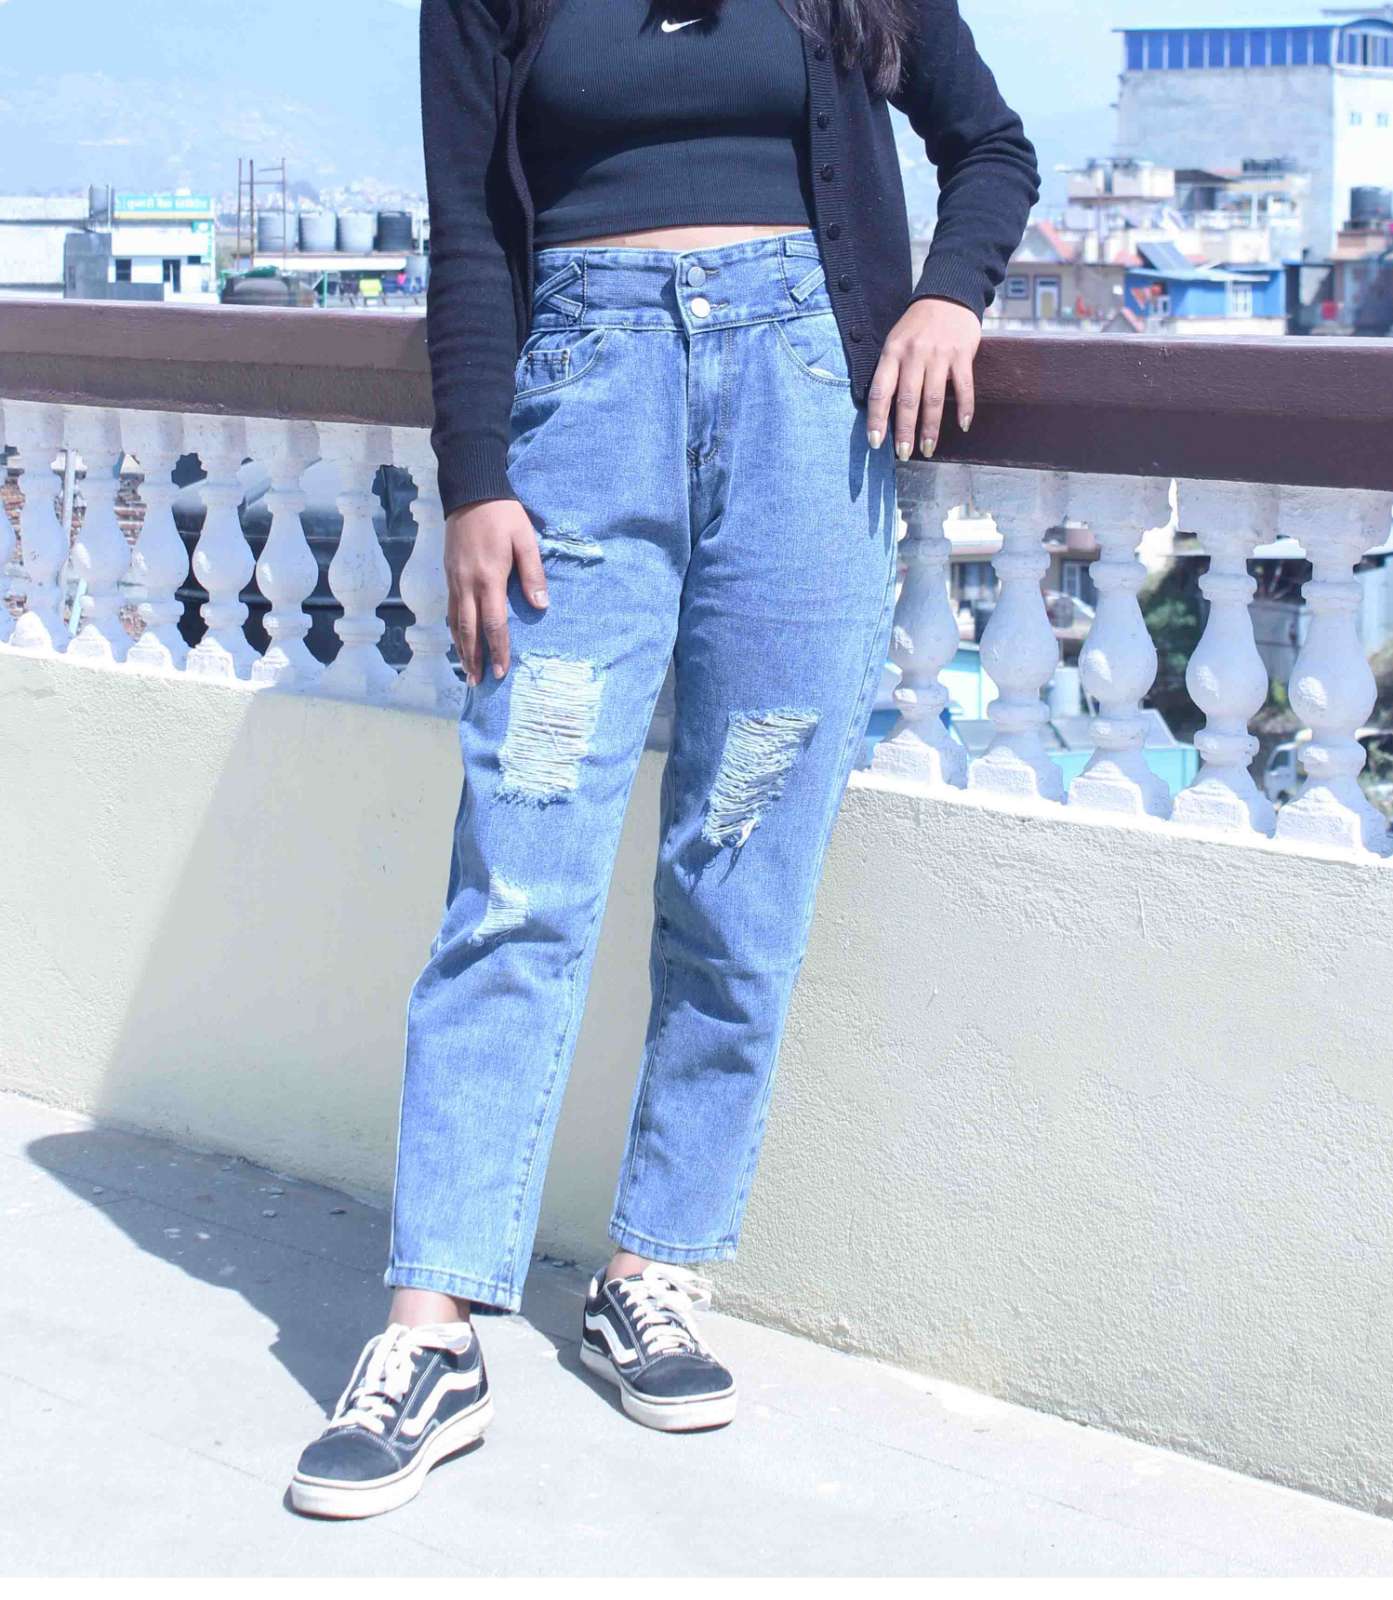 MRULIC jeans for women Womens Denim Skinny Jeans Nepal